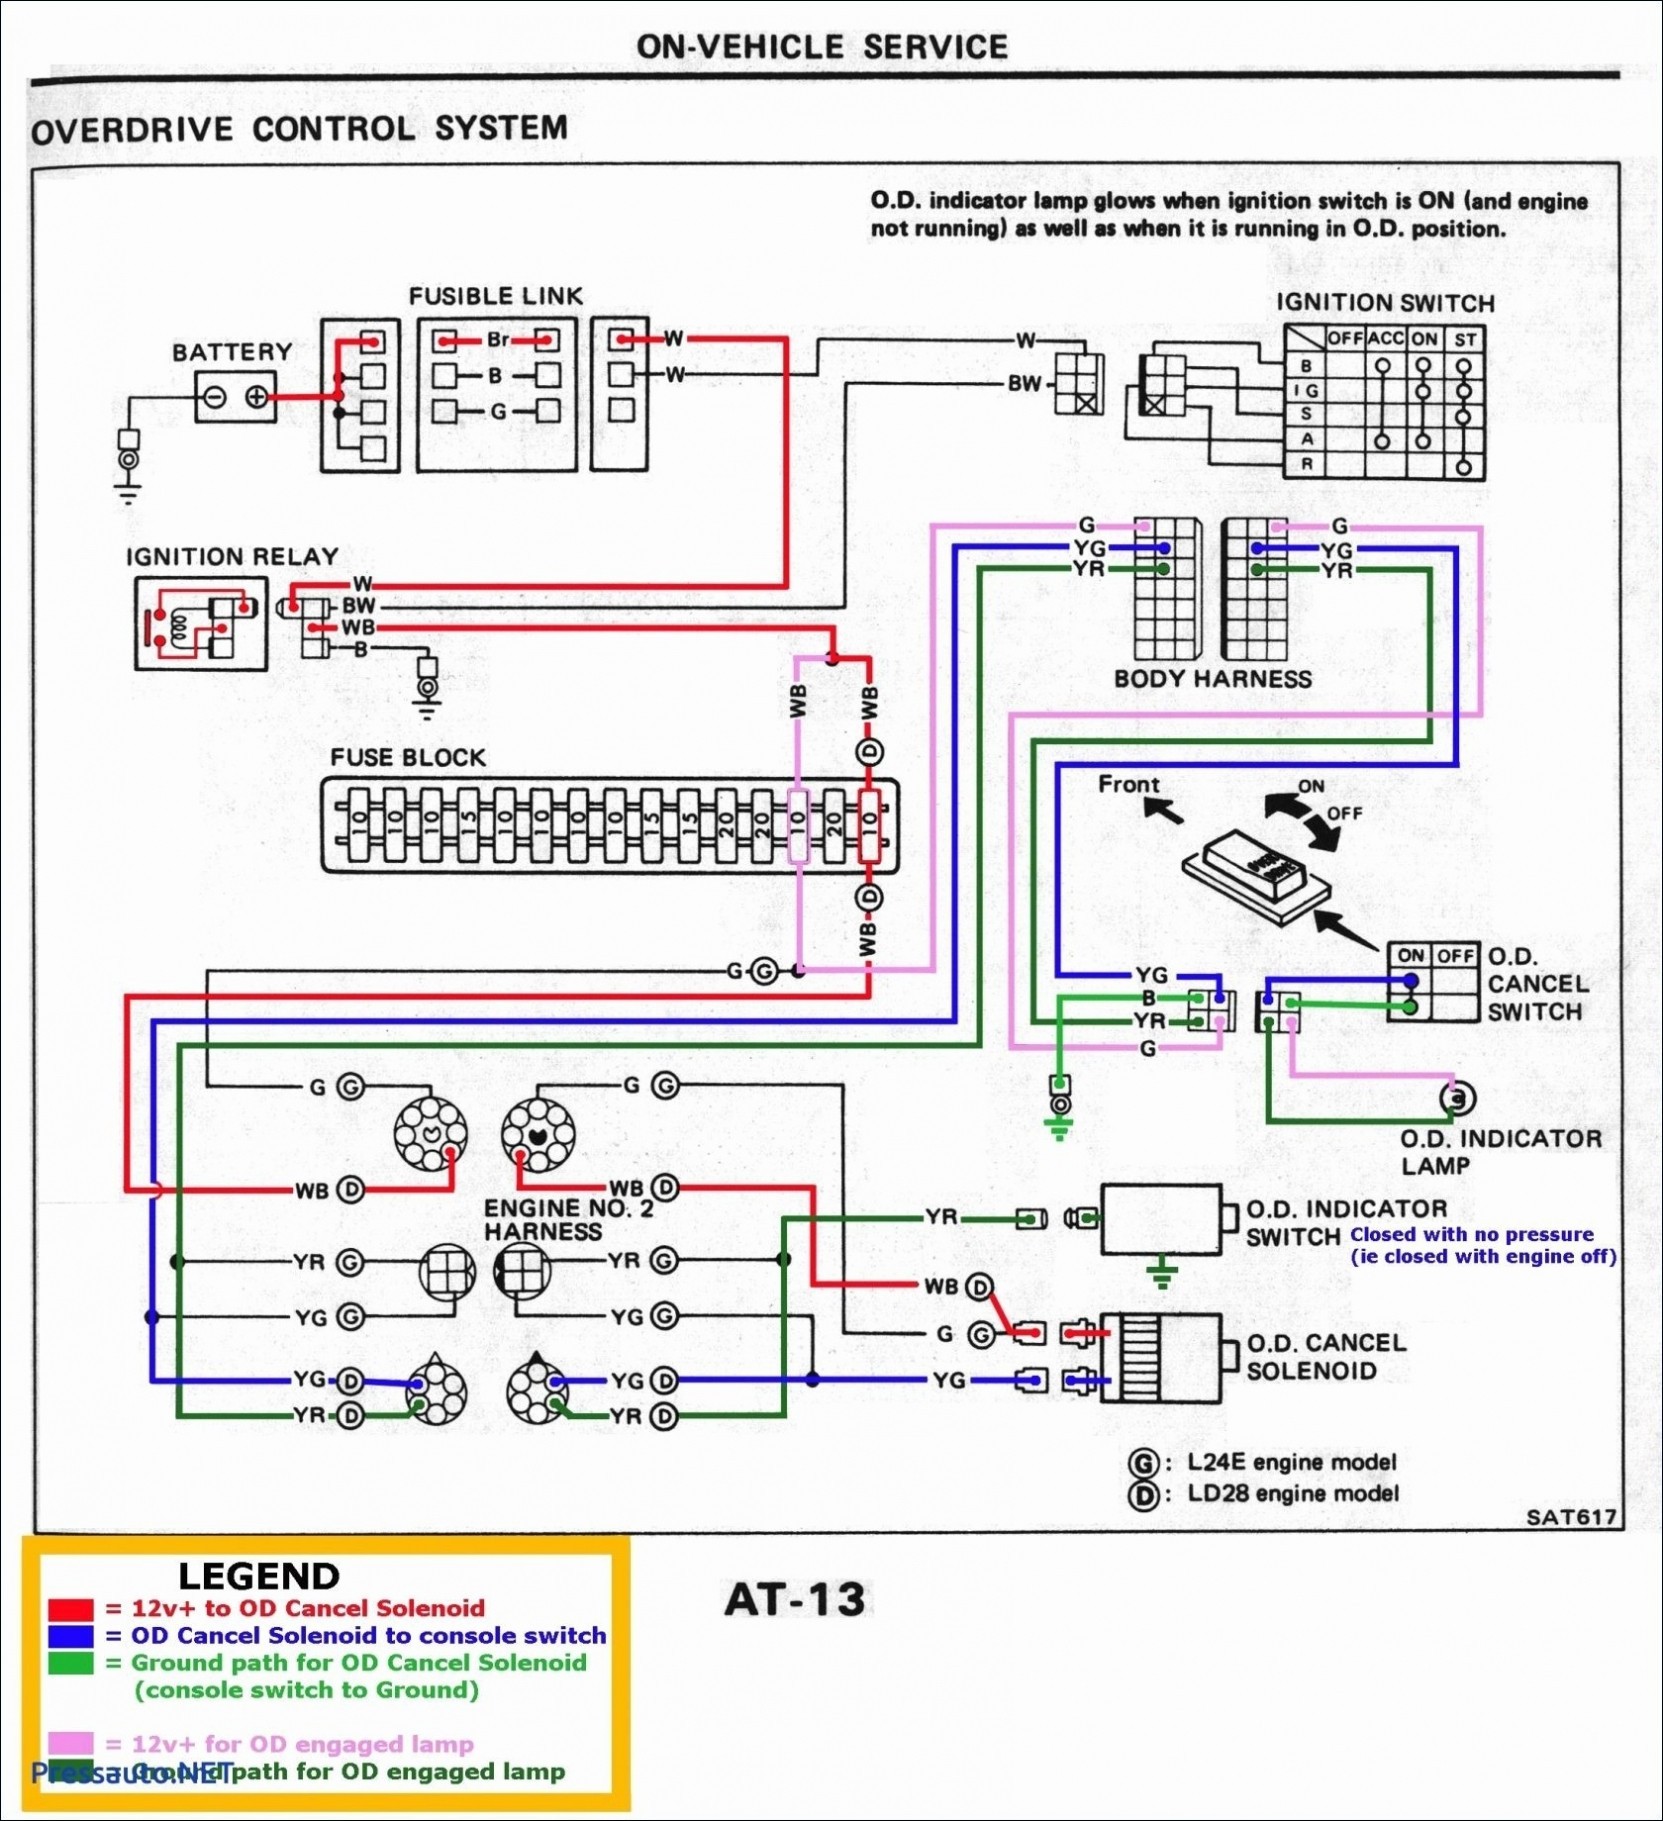 Hunter Fan Wiring Diagram Rate Hampton Bay 3 Speed Ceiling Fan Switch Wiring Diagram – Ceiling Fan